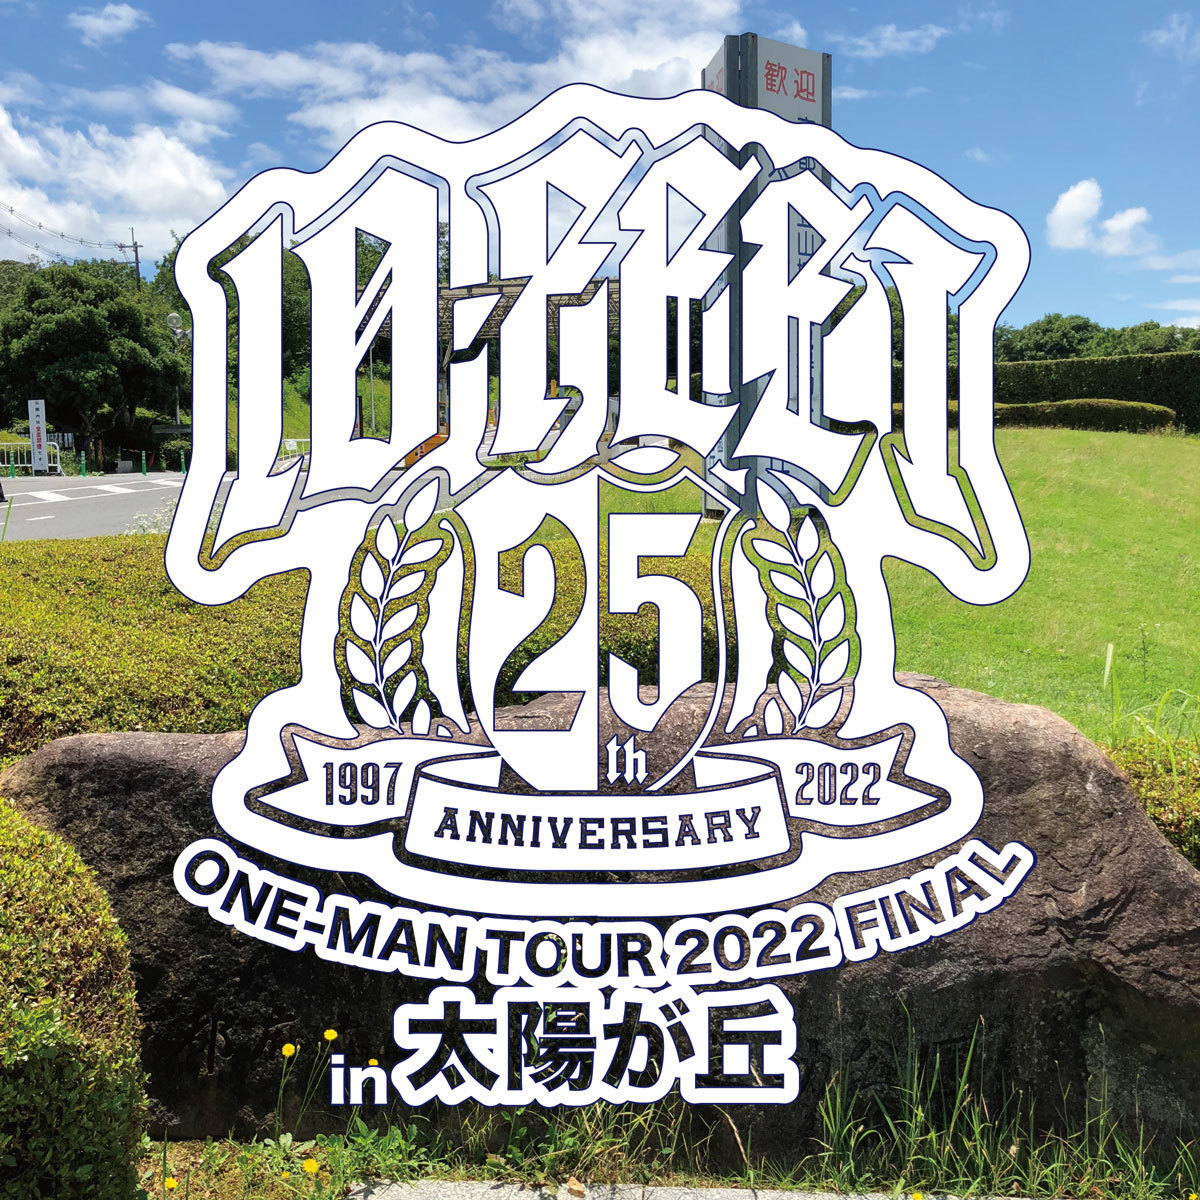 10-FEET 25th ANNIVERSARY ONE-MAN TOUR 2022 FINAL in 太陽が丘 開催